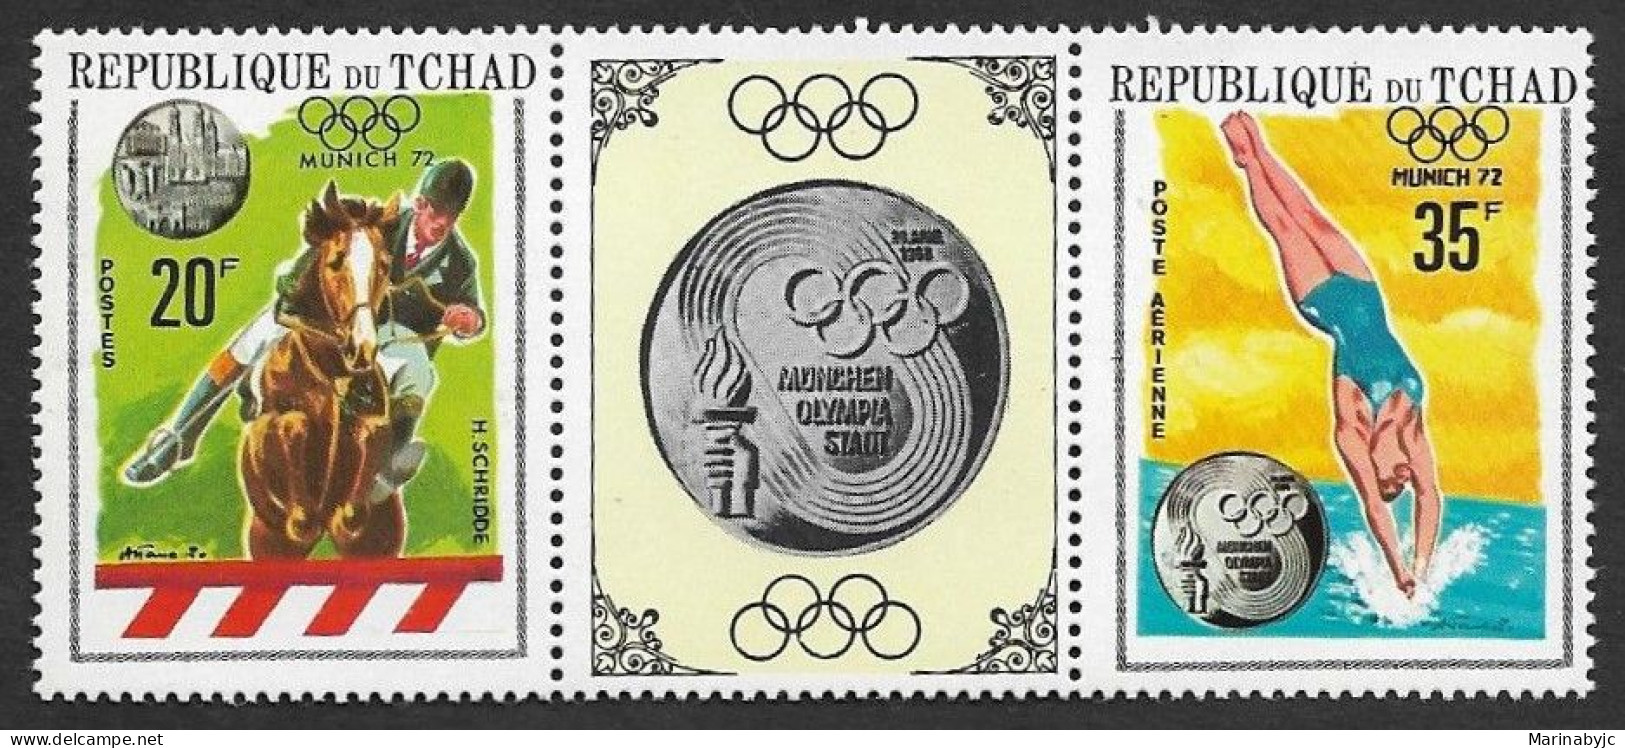 SD)1972 CHAD SPORTS SERIES, OLYMPIC GAMES MUNICH, GERMAN R. F. WINNERS, STRIP OF 3 MNH STAMPS - Tsjaad (1960-...)